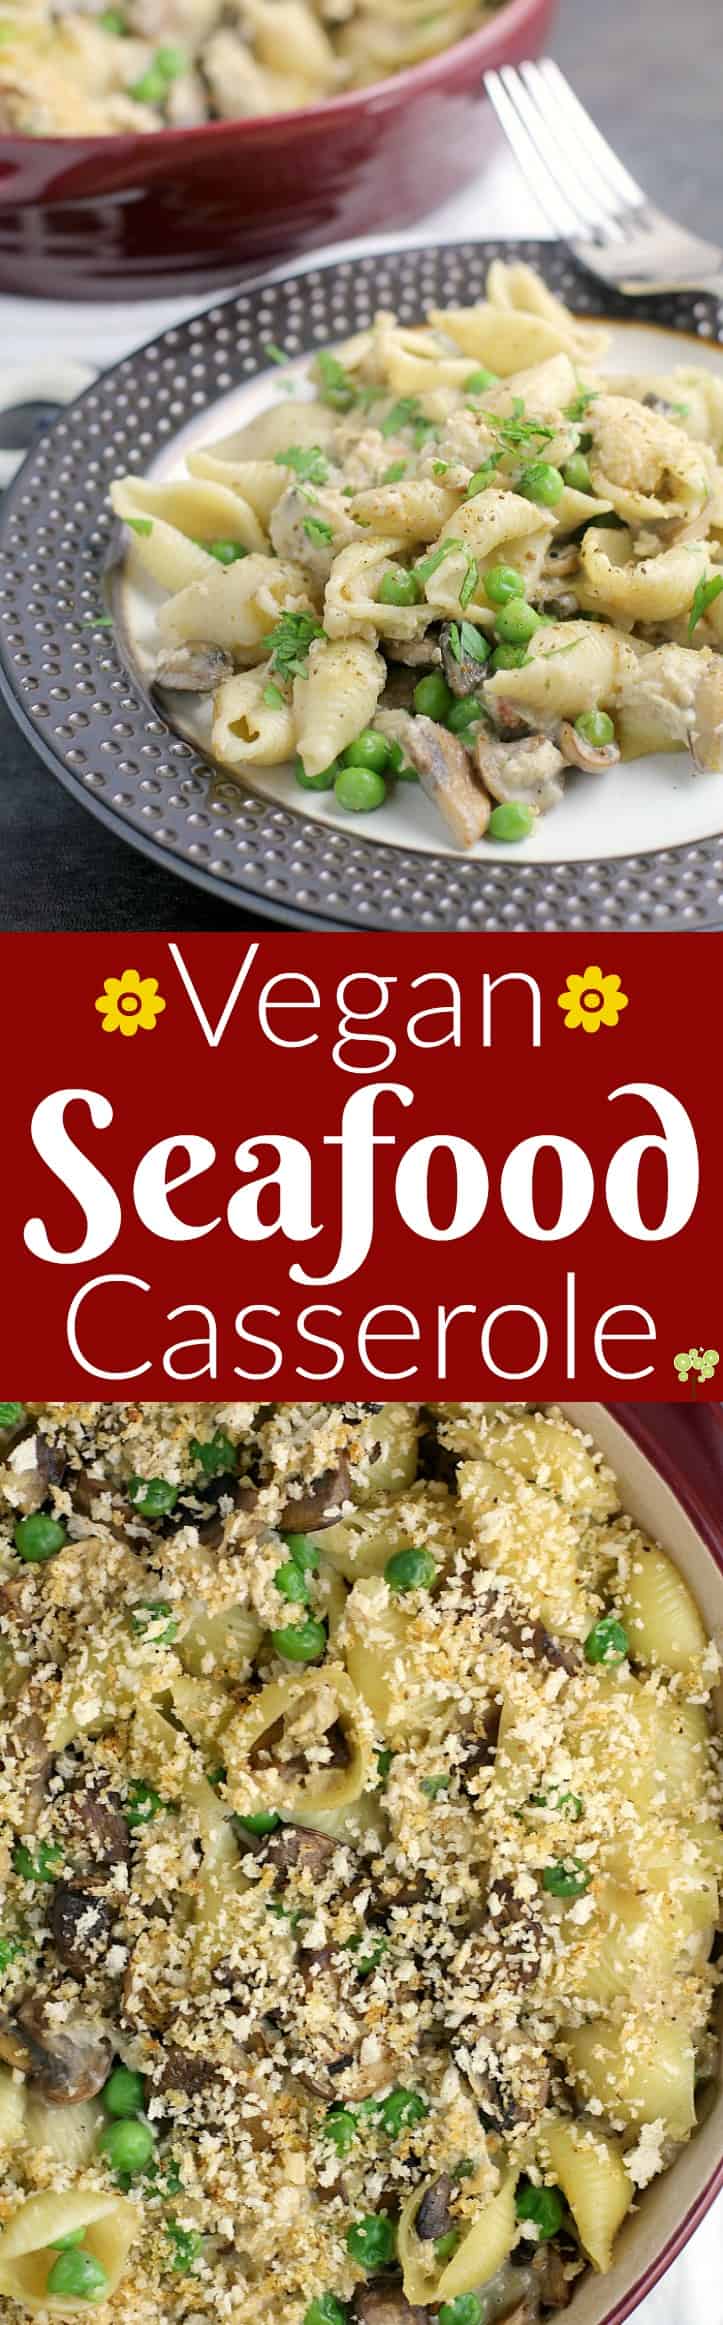 Vegan Seafood Casserole http://wp.me/p4qC4h-3tN